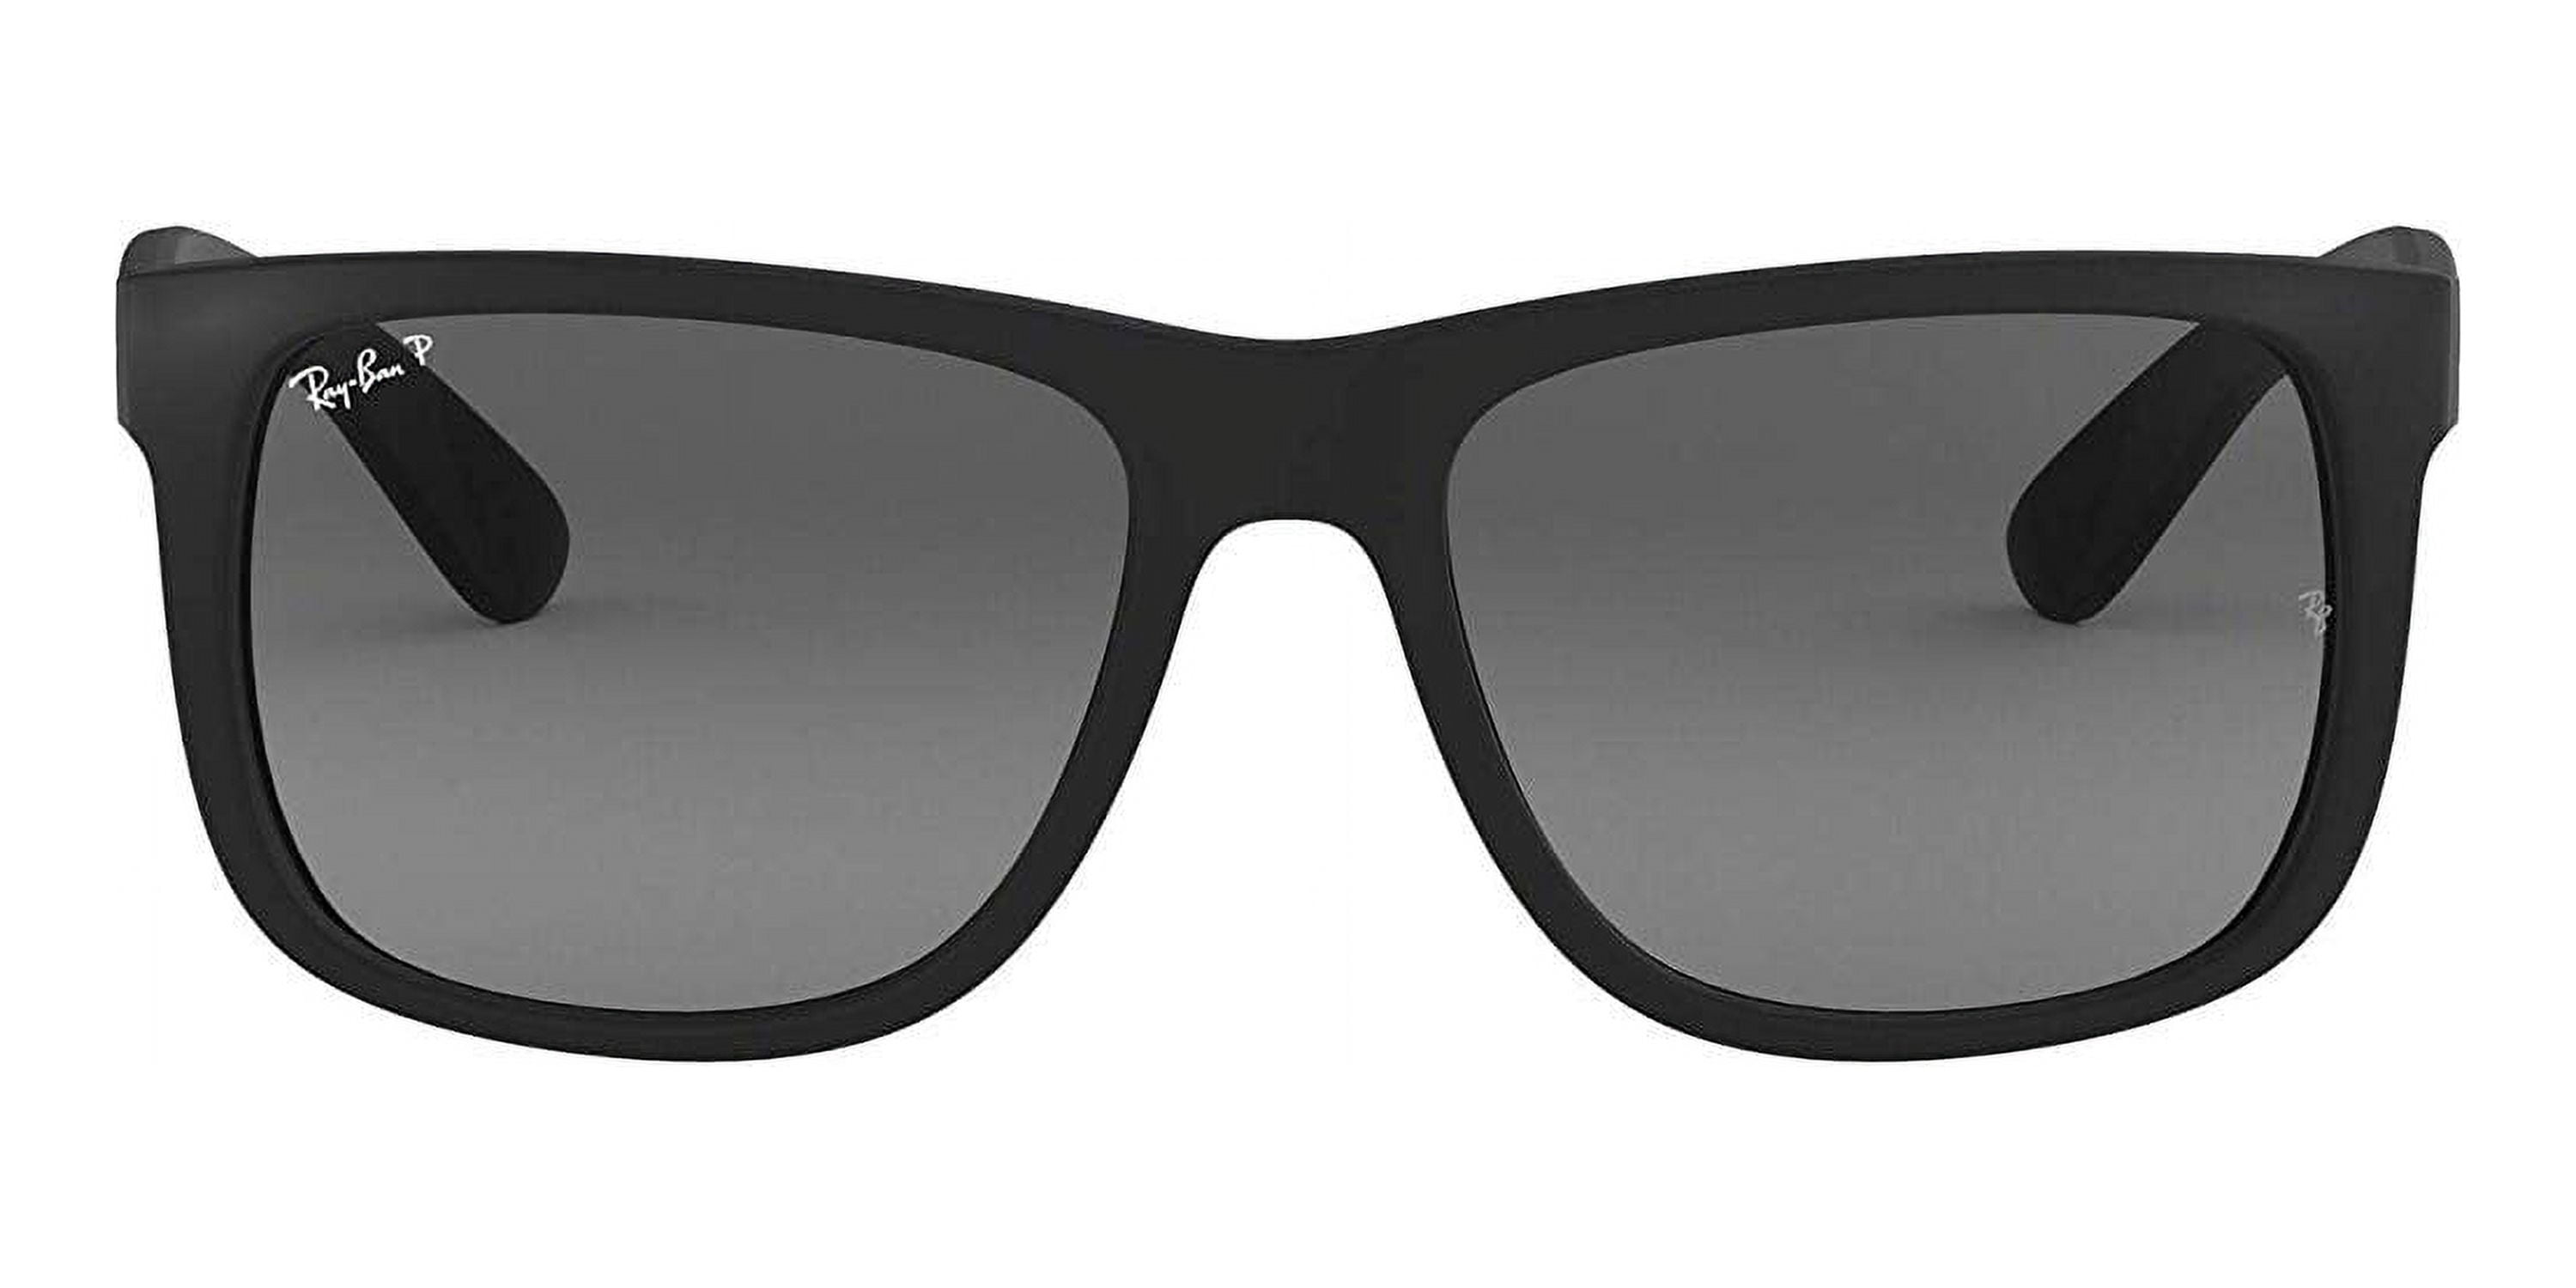 JUSTIN CLASSIC Sunglasses in Black and Dark Grey - RB4165